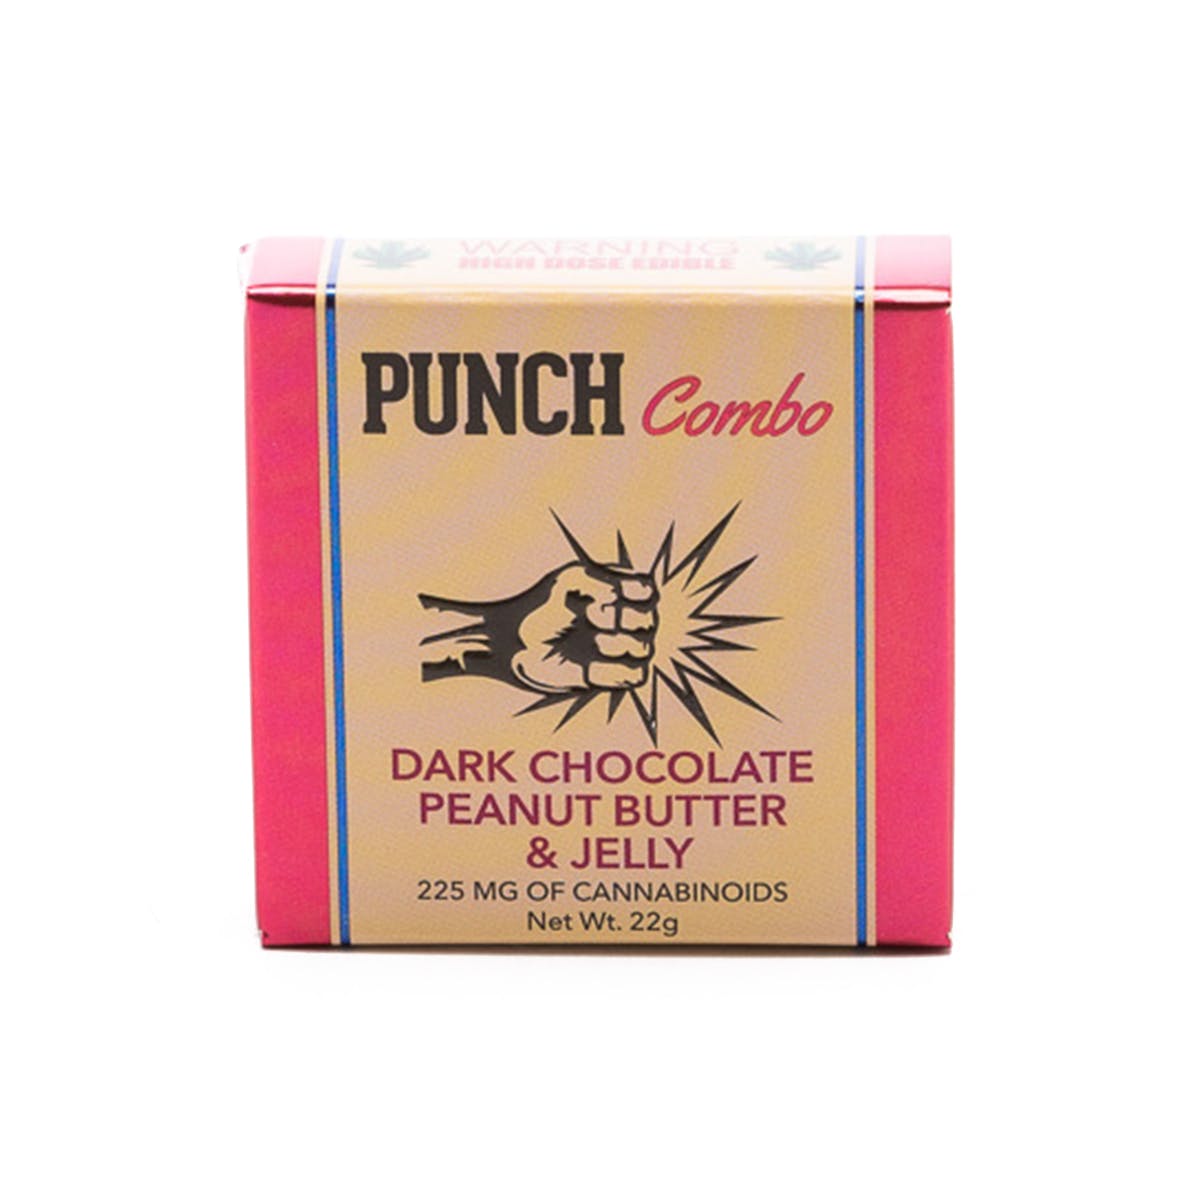 Dark Chocolate Peanut Butter & Jelly COMBO, 225mg